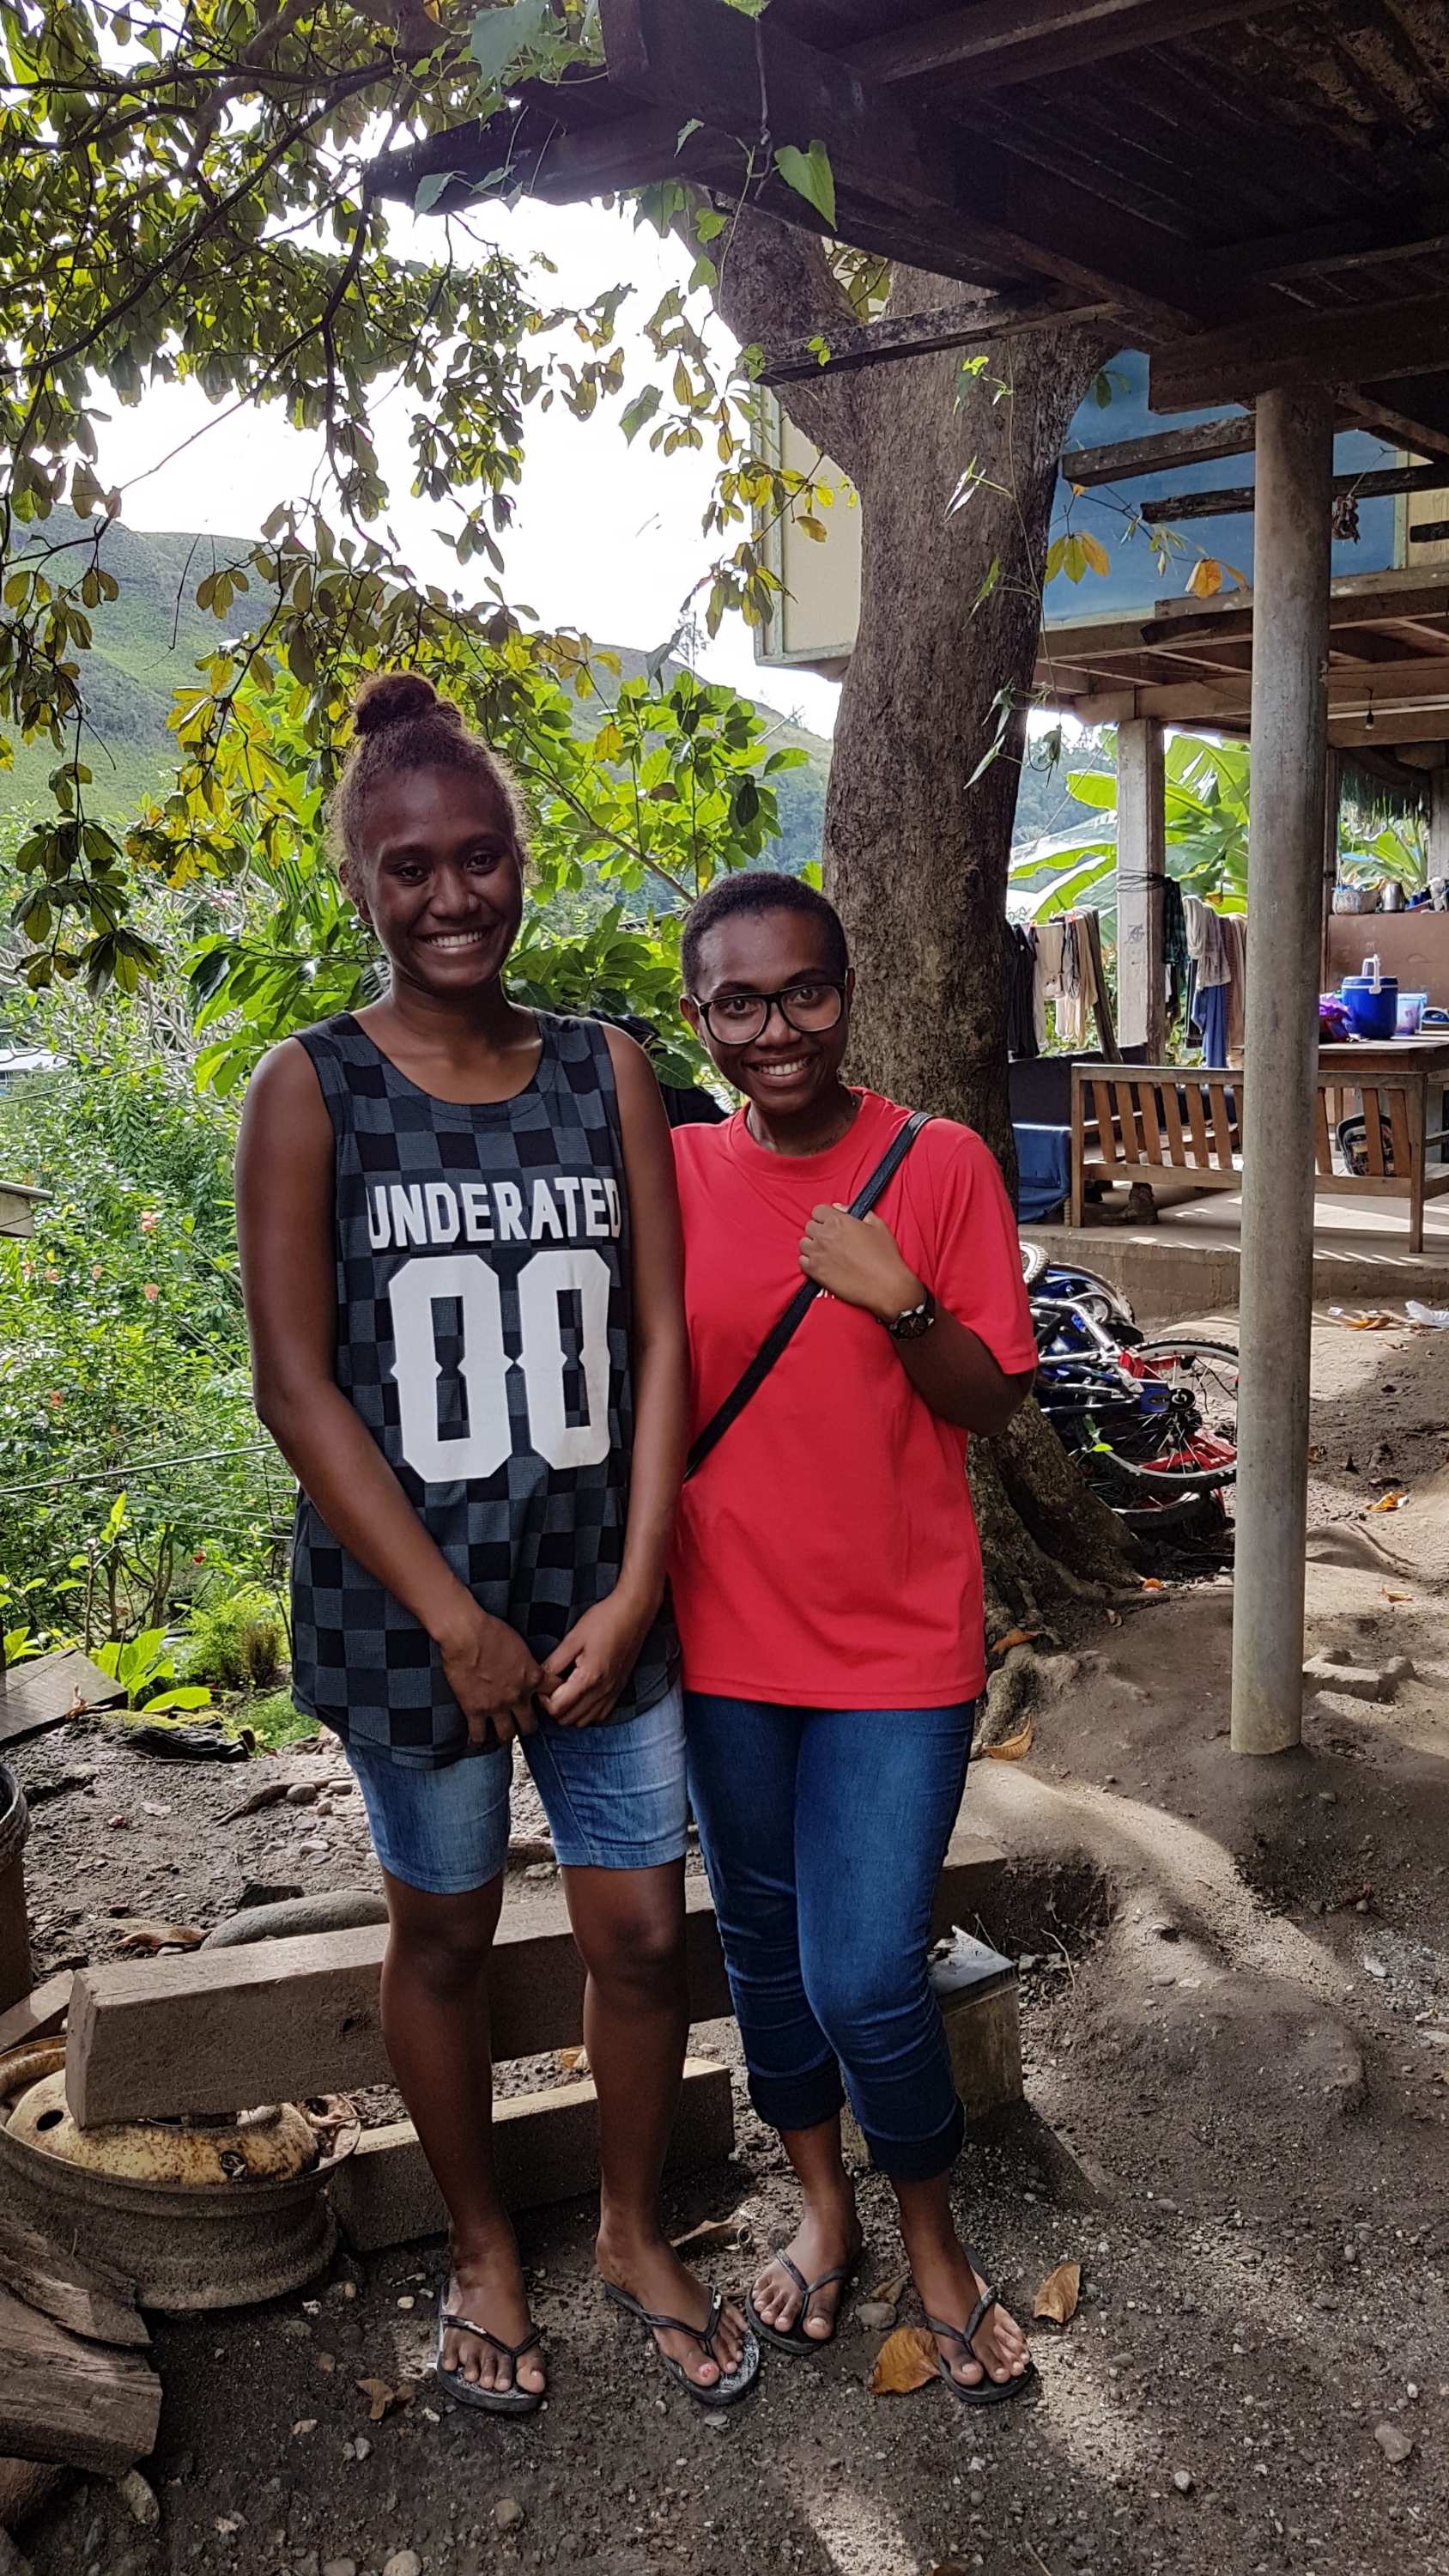 Solomon Islands: encounters in paradise